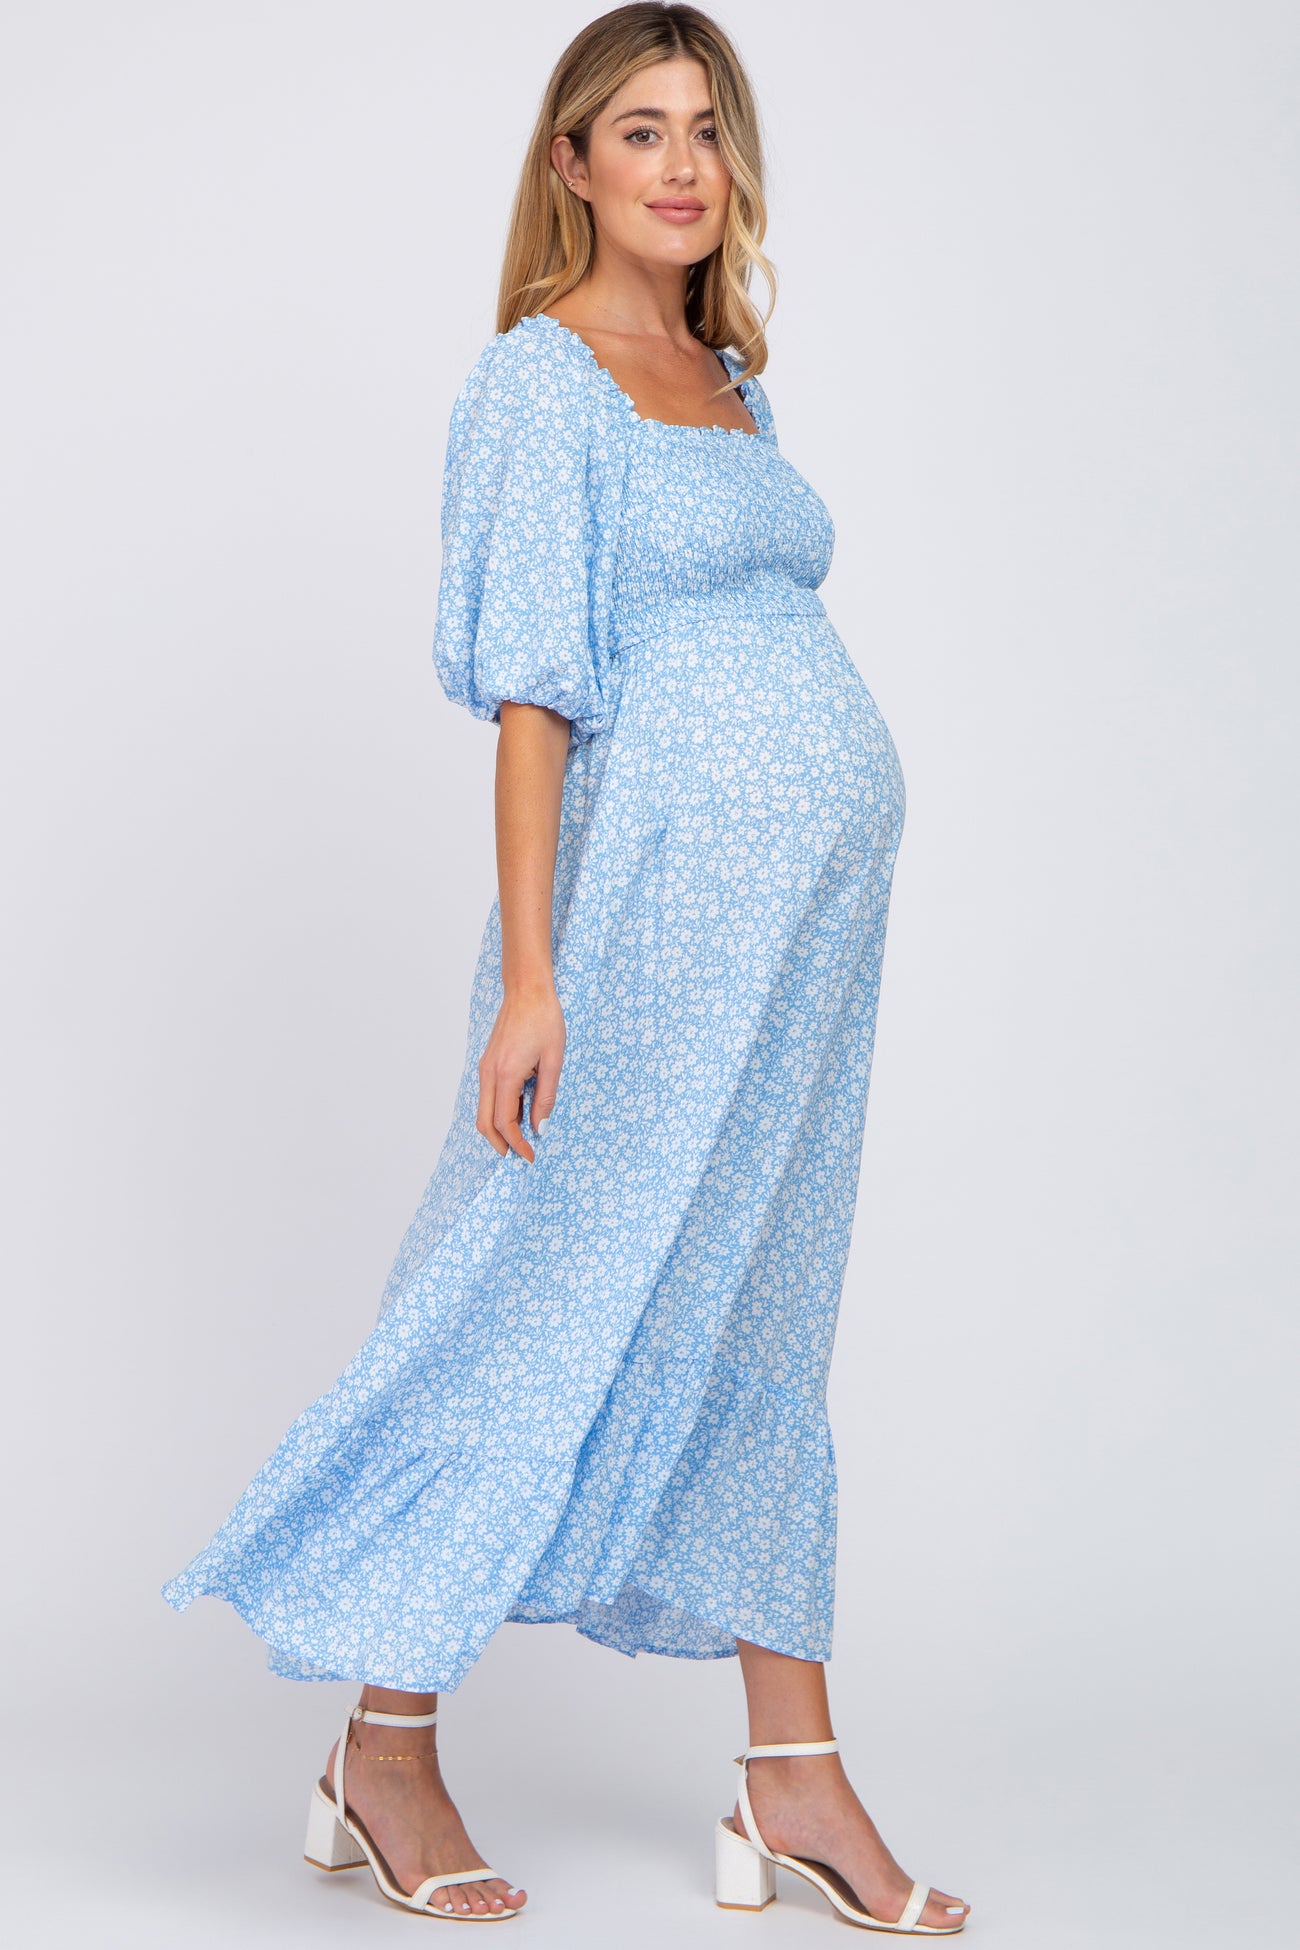 Blue Floral Smocked Maternity Maxi Dress– PinkBlush